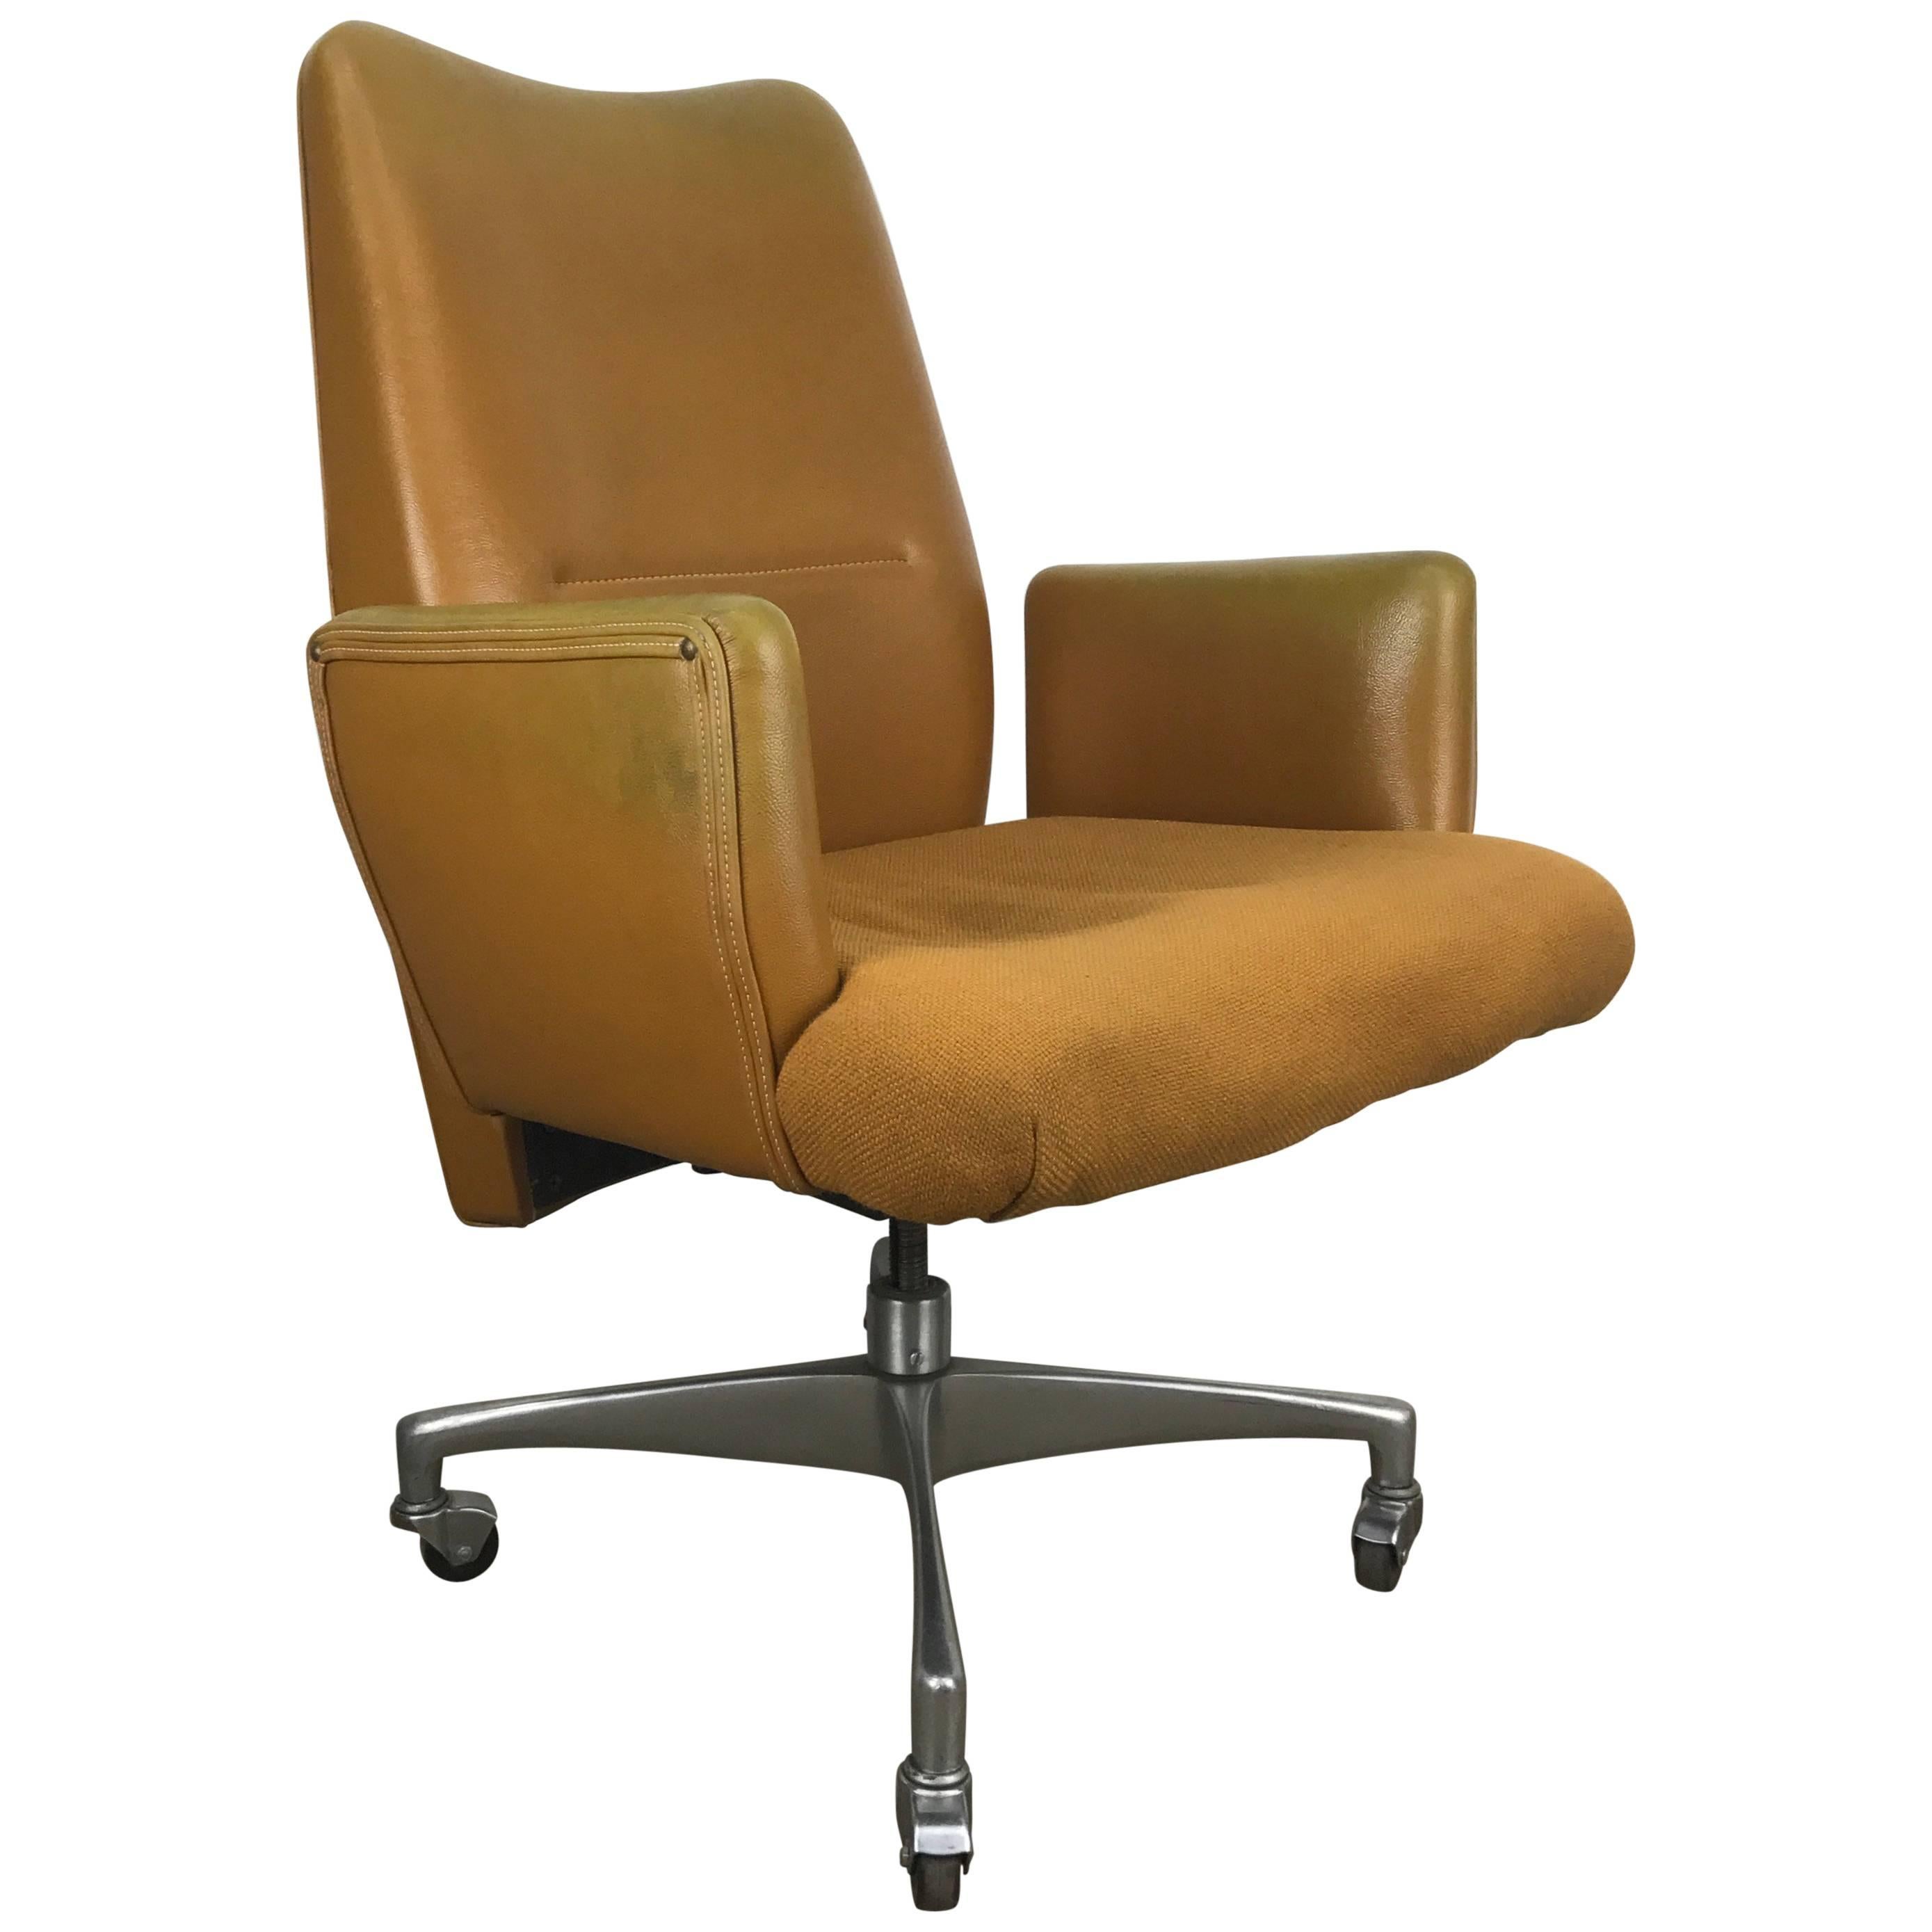 Unusual 1960s Modernist Executive Oversized Desk Chair